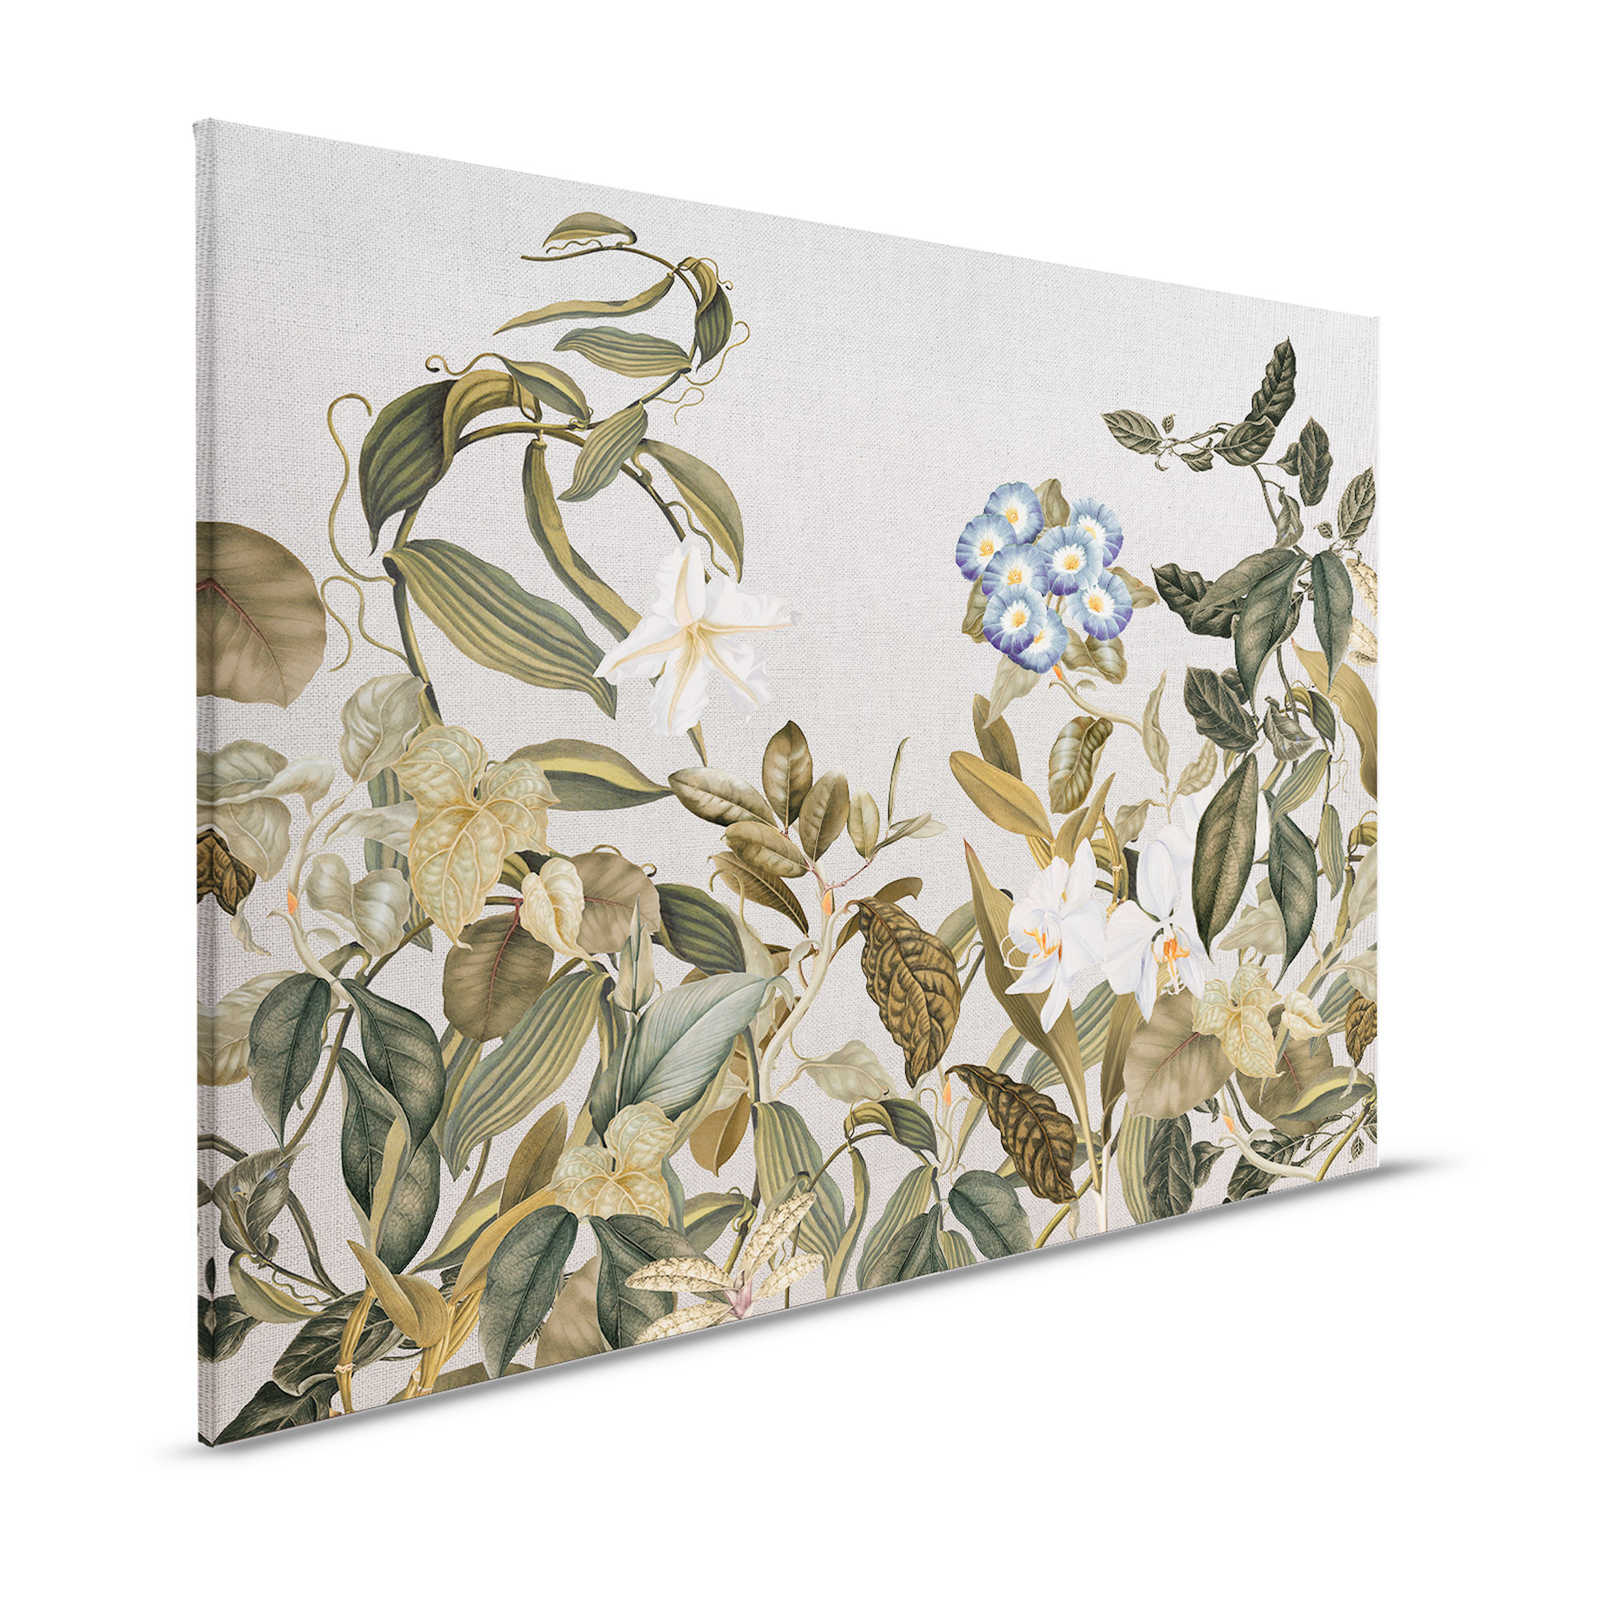 Tela dipinta in stile botanico Fiori, foglie e aspetto tessile - 1,20 m x 0,80 m
